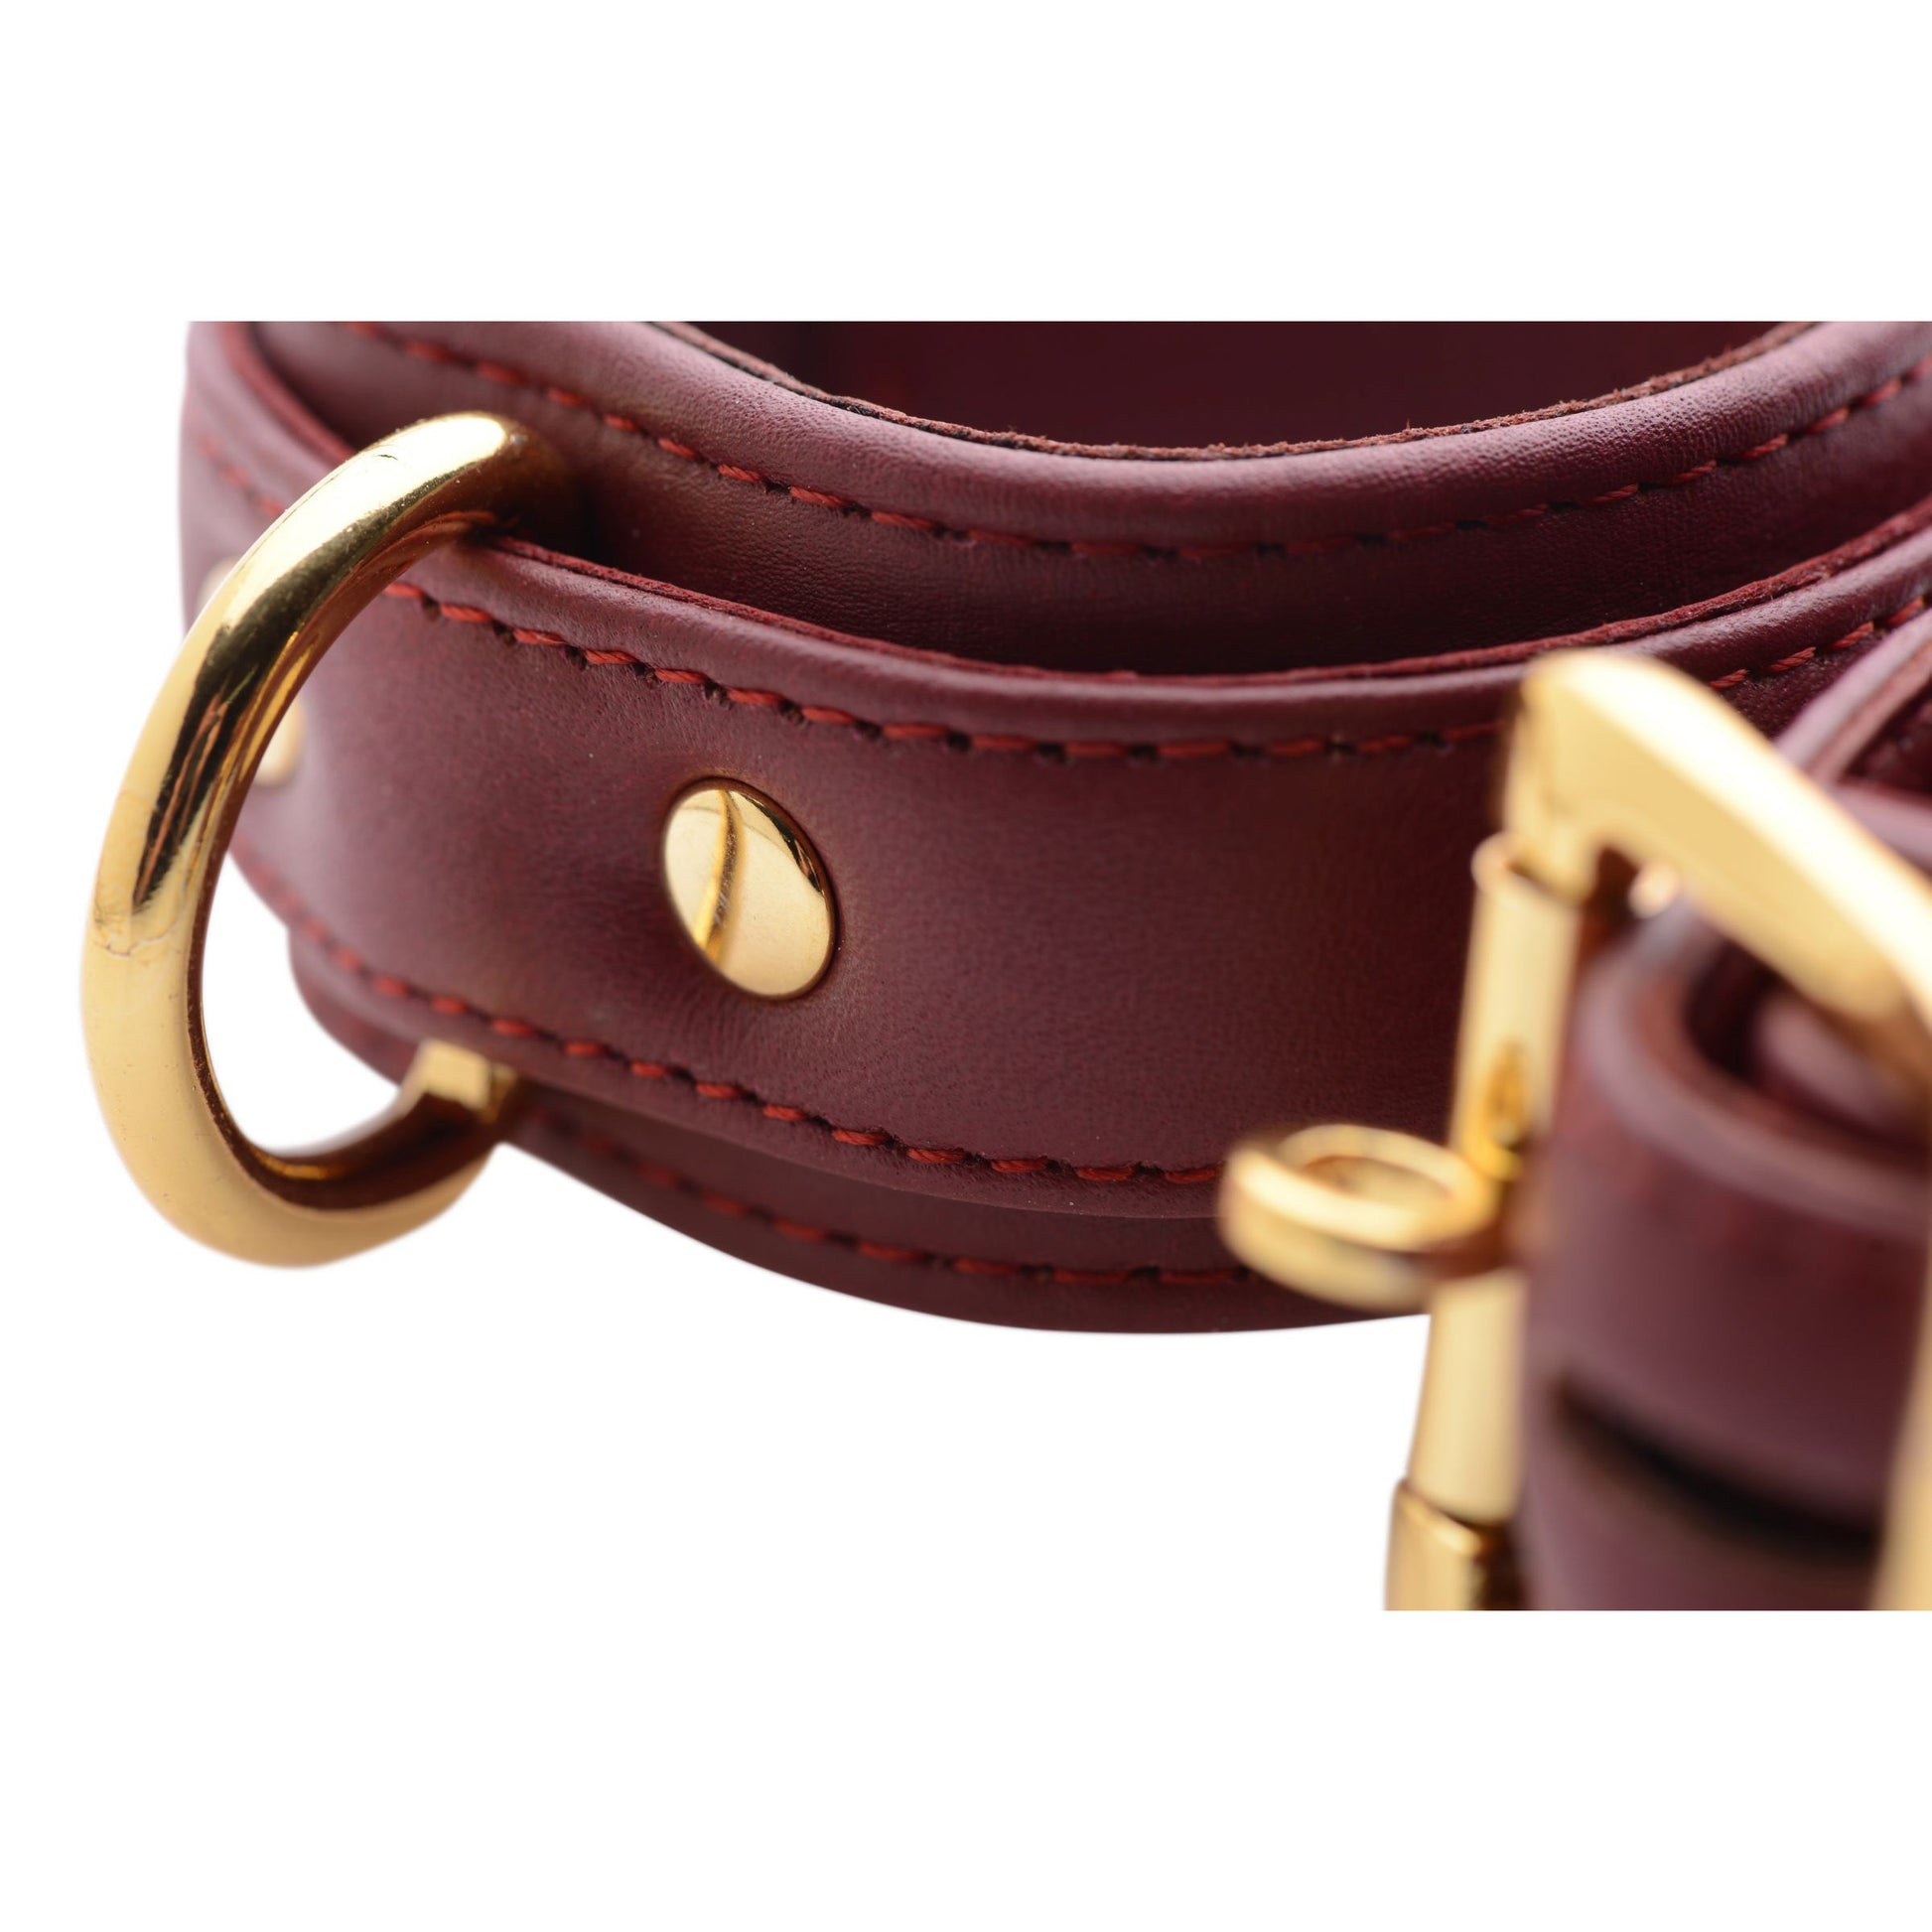 Strict Leather Luxury Burgundy Locking Ankle Cuffs - UABDSM